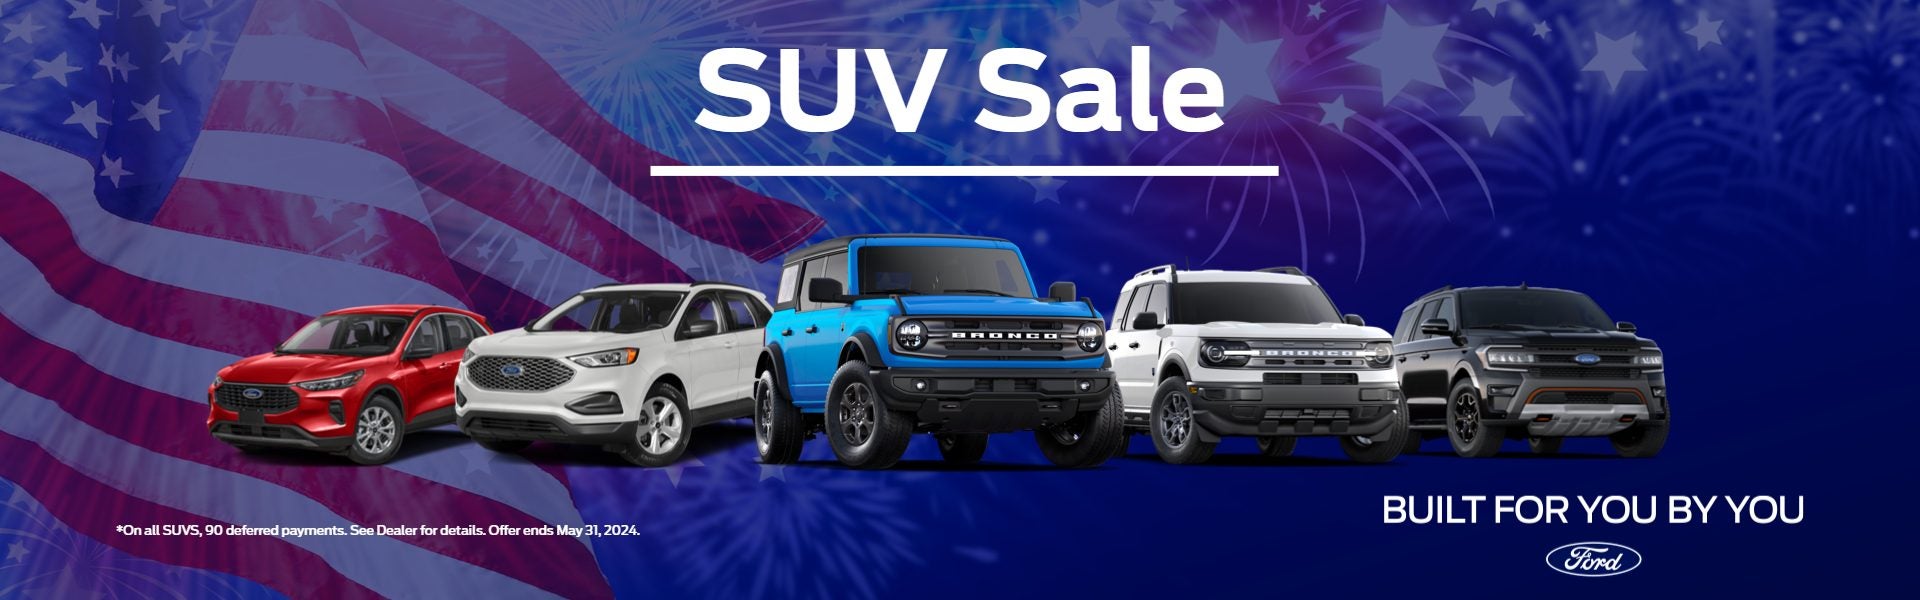 SUV Sale Homepage Banner